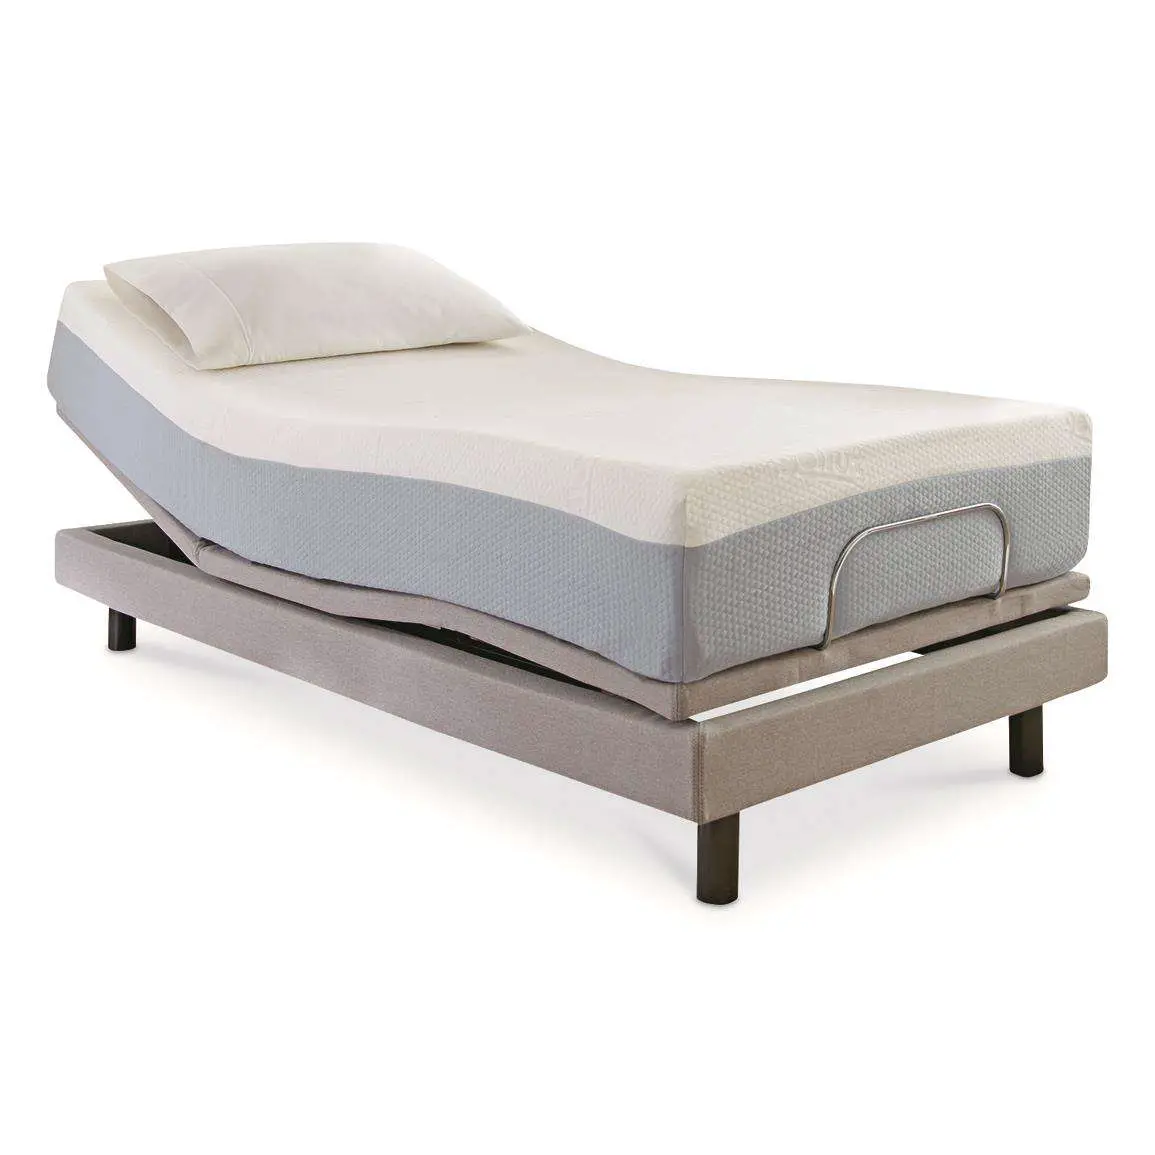 Tranquil Sleep Supreme Adjustable Base, Twin XL